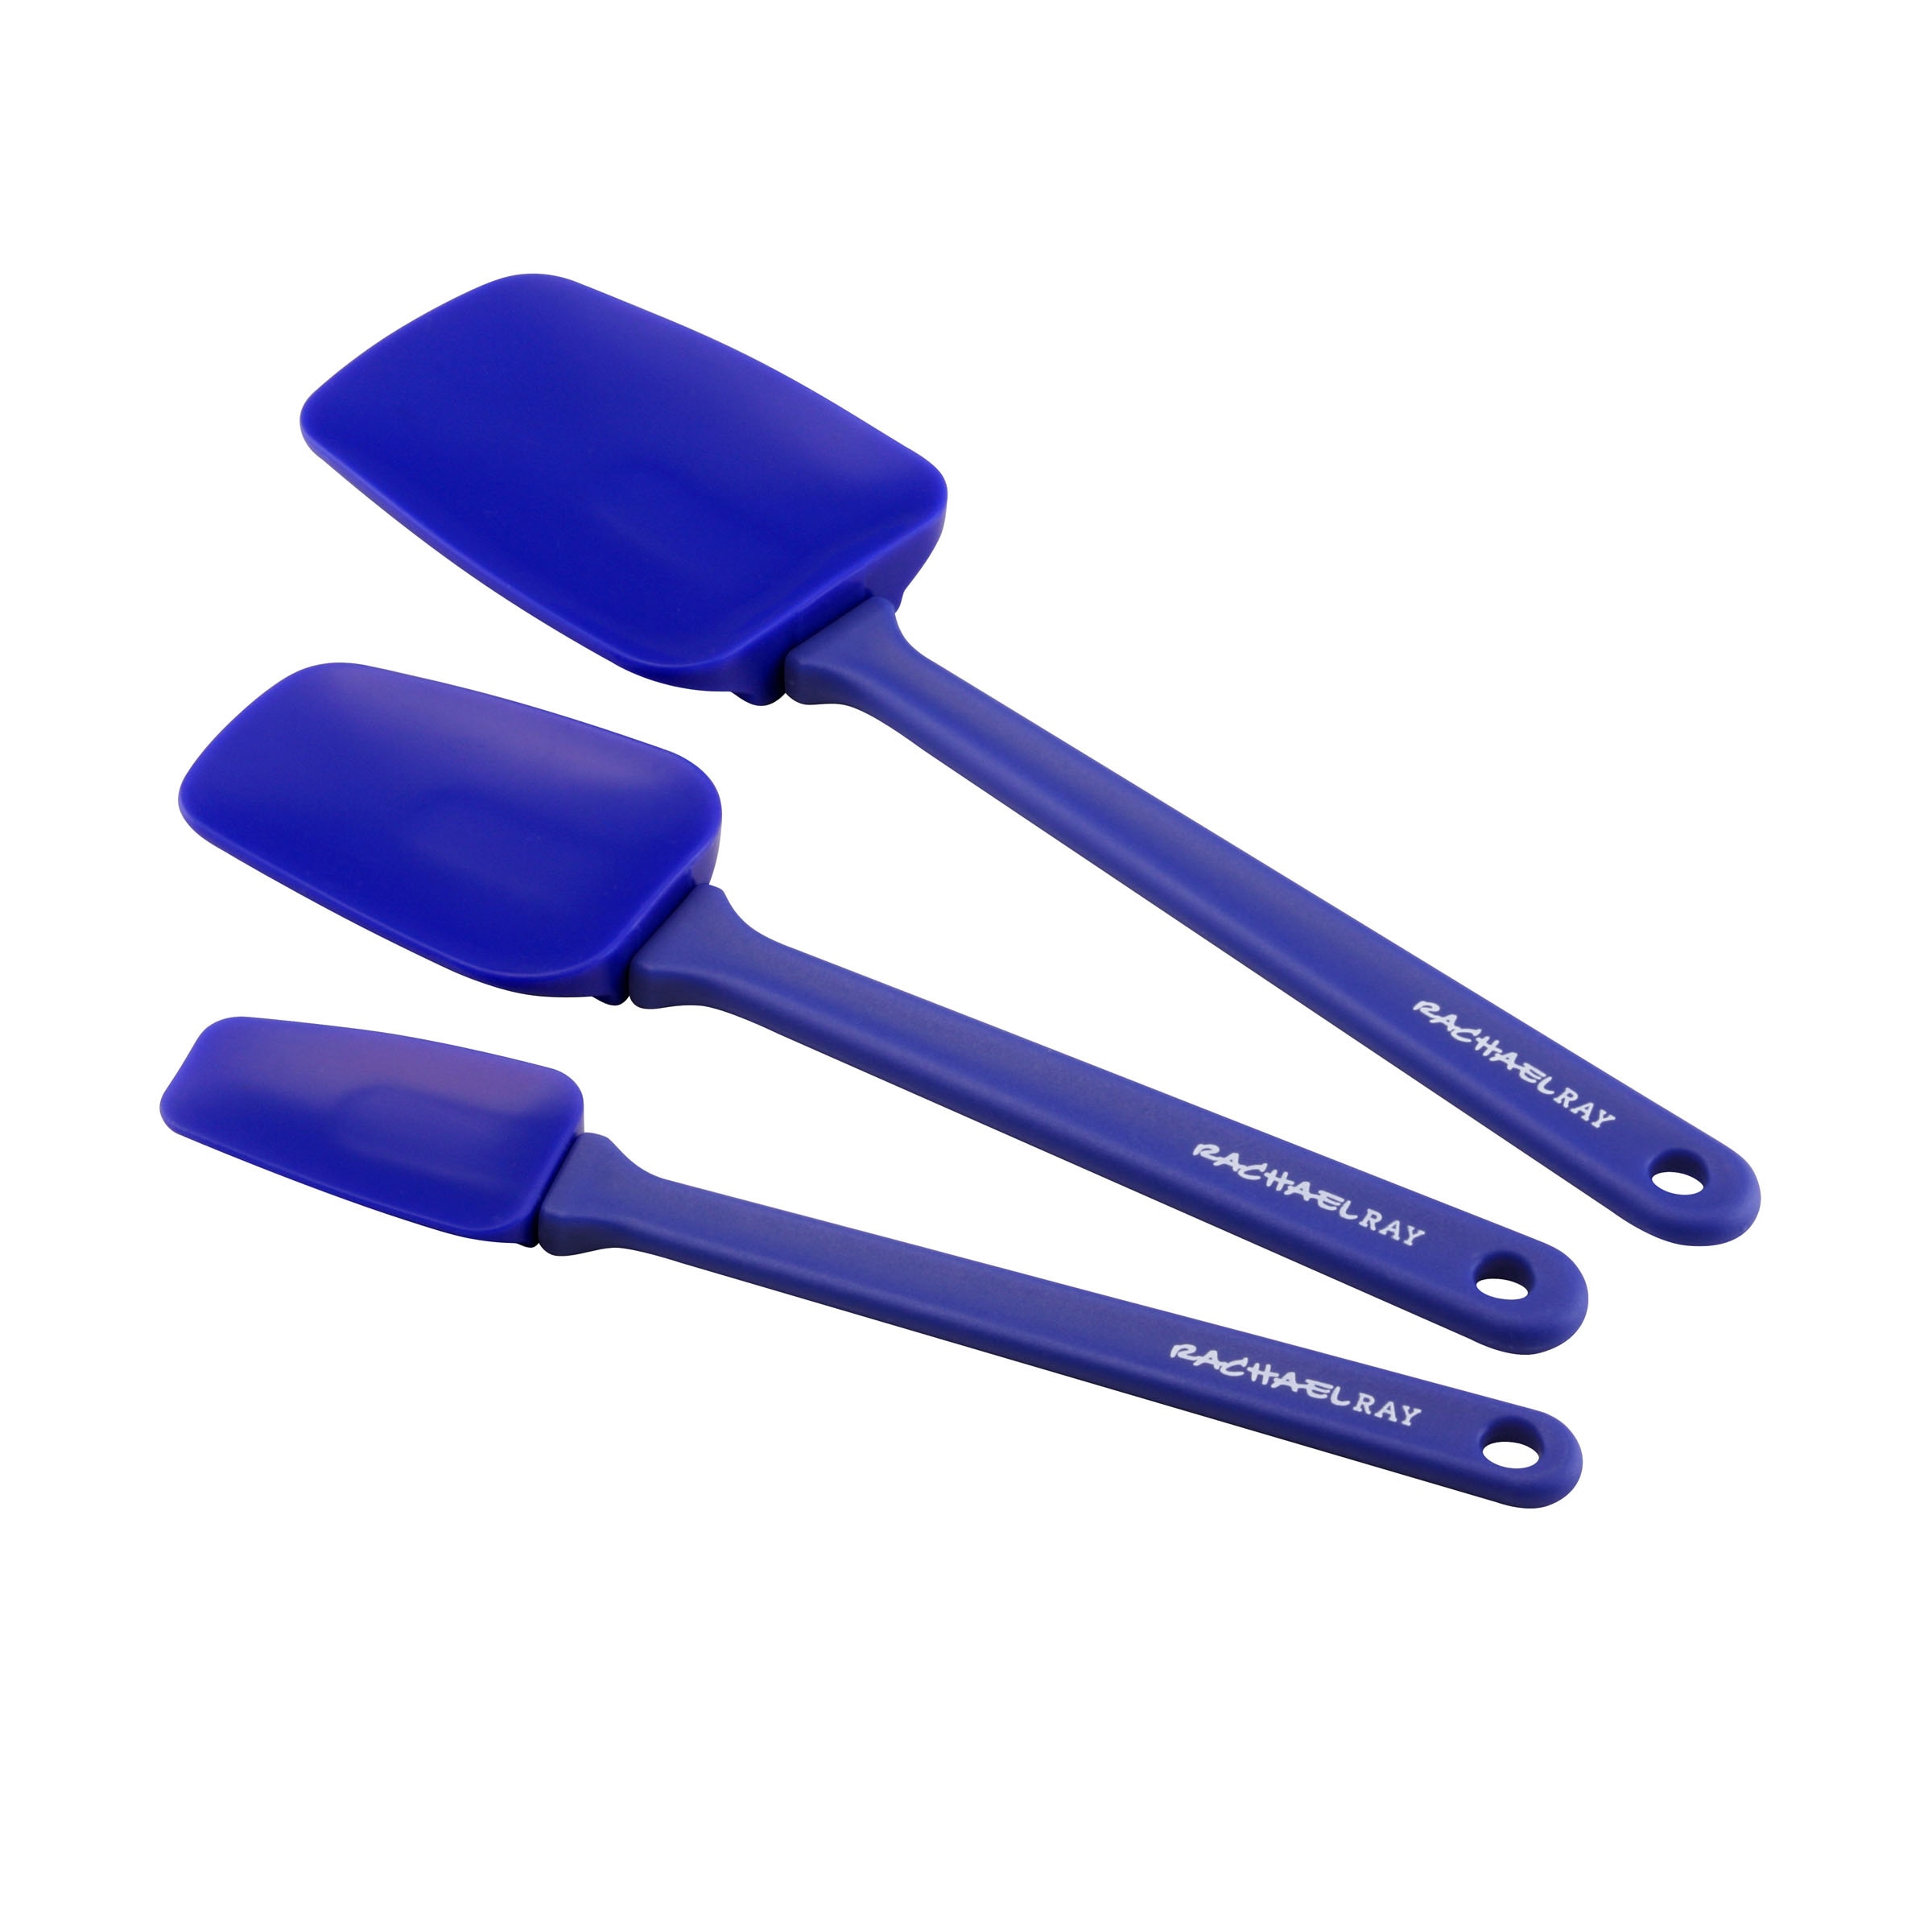 https://ak1.ostkcdn.com/images/products/7468624/Rachael-Ray-Tools-Blue-3-piece-Spoonula-Set-a038d3cd-91ef-43b8-96af-19d99fb83b9b.jpg